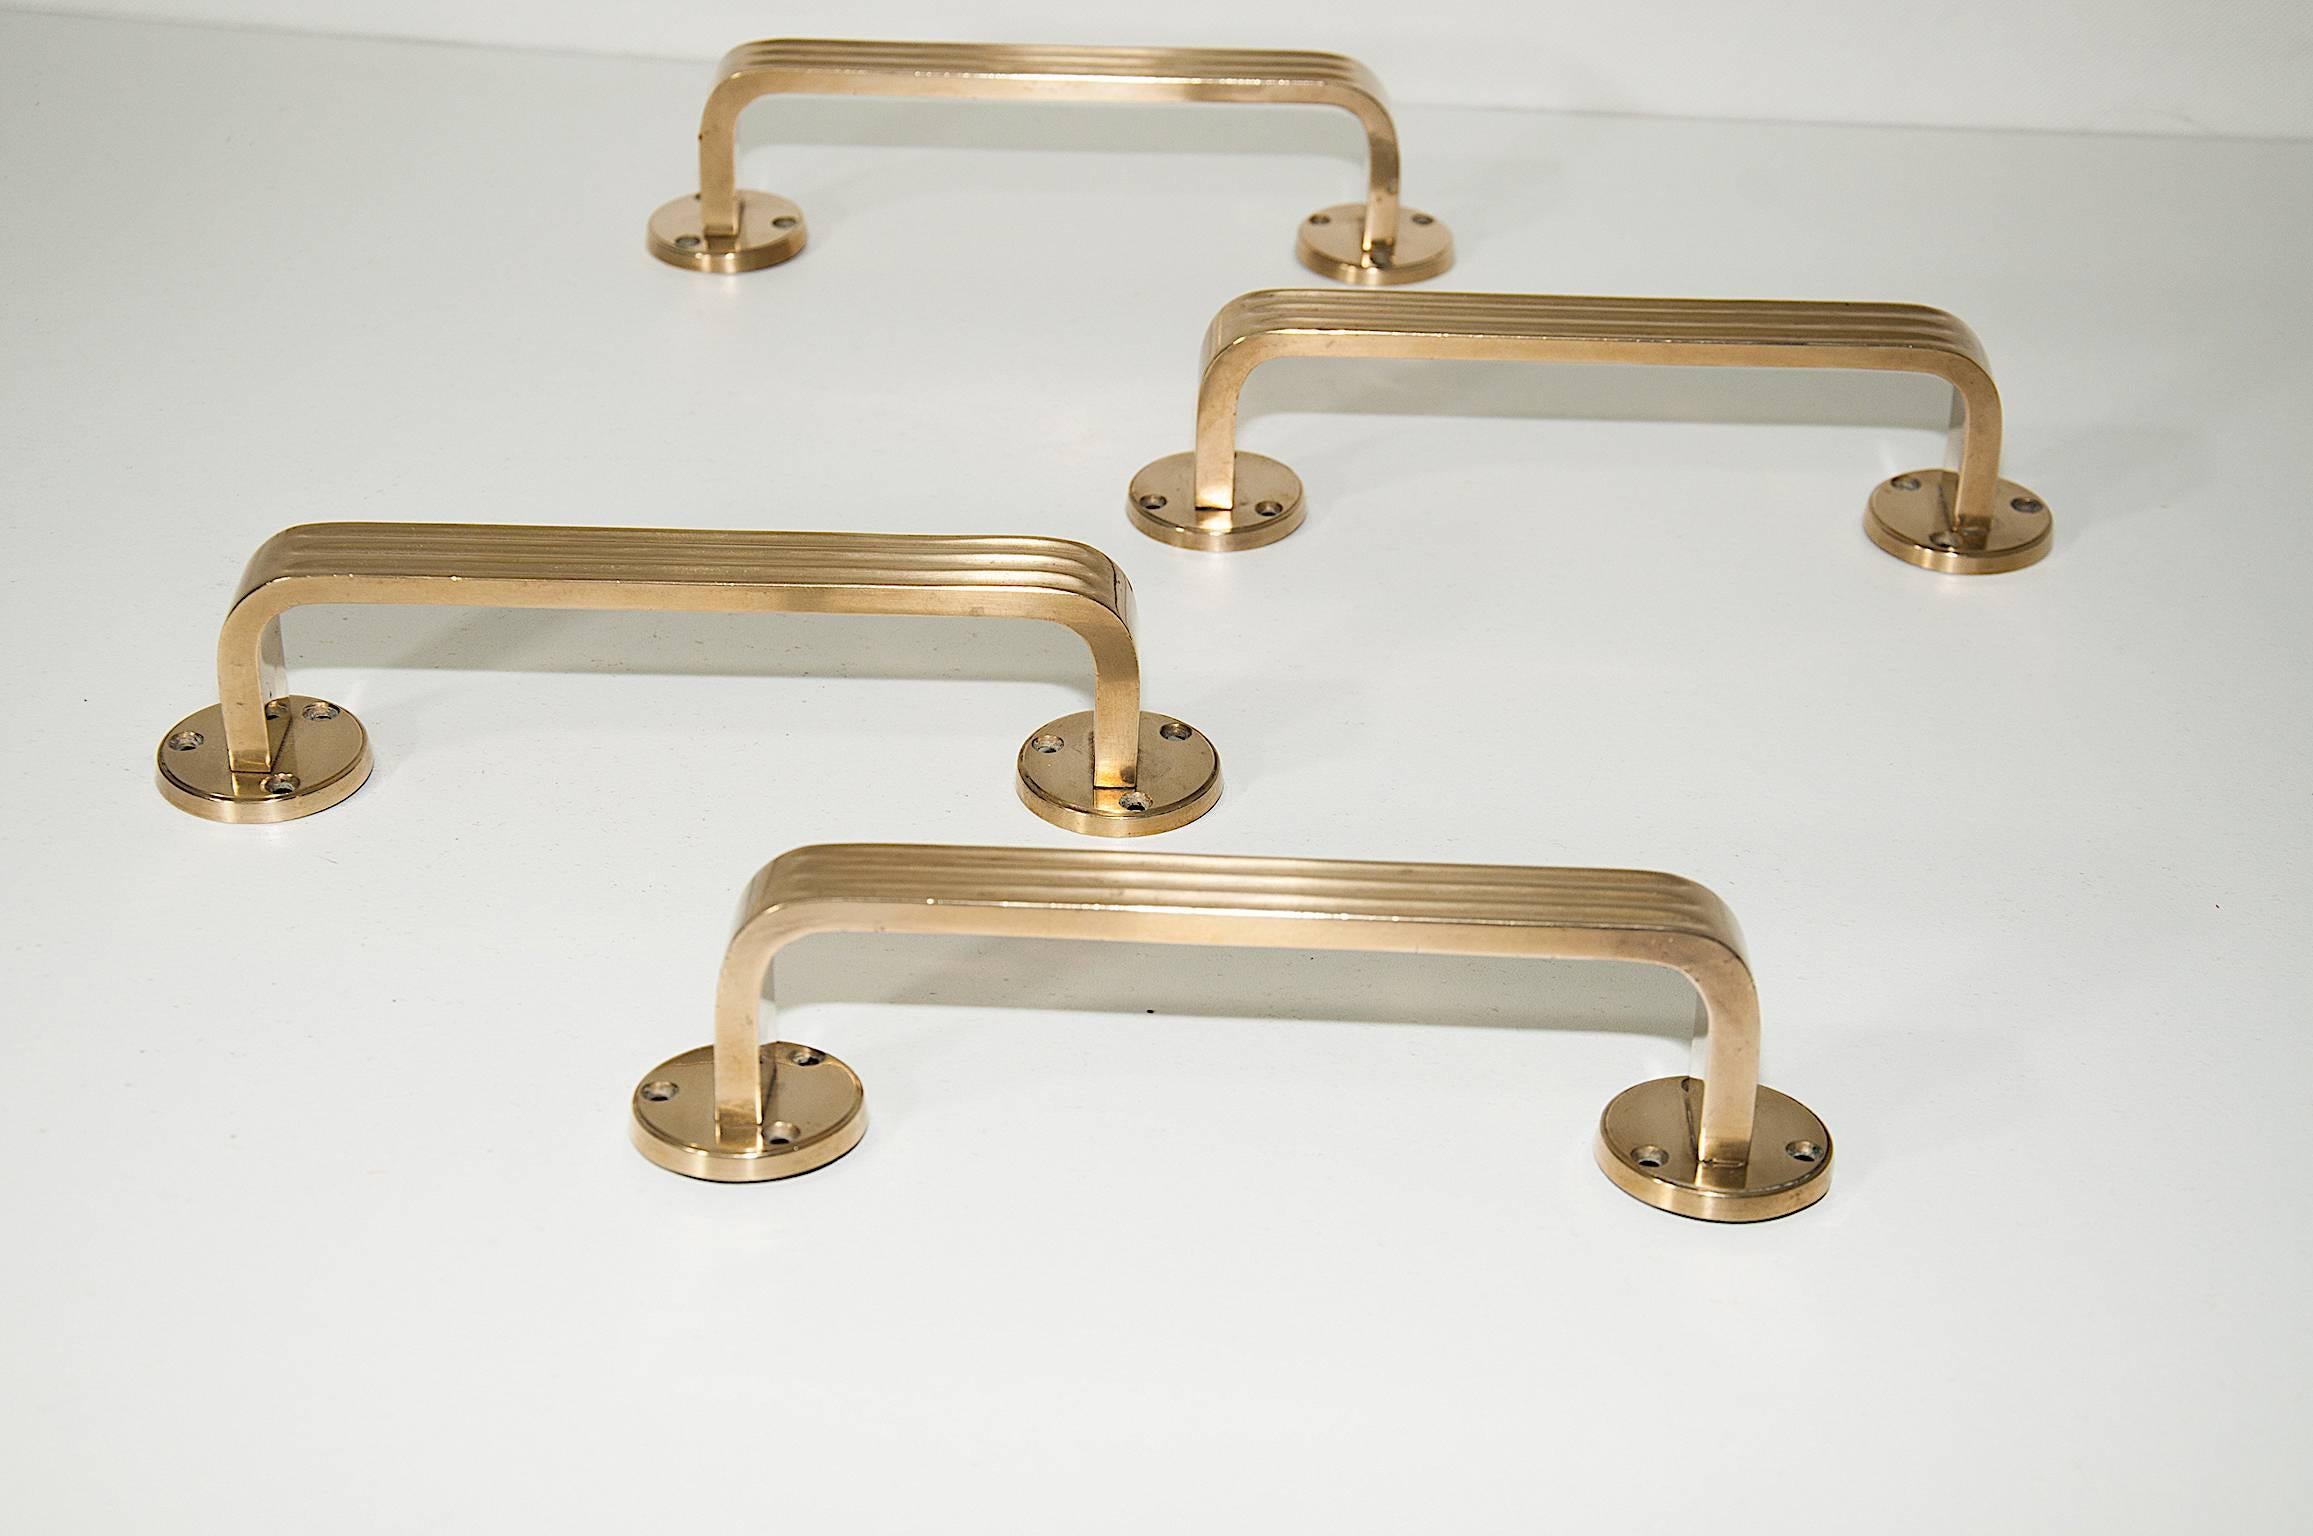 Door handles
Set of four door handles, that can be sold as a set or per unit.